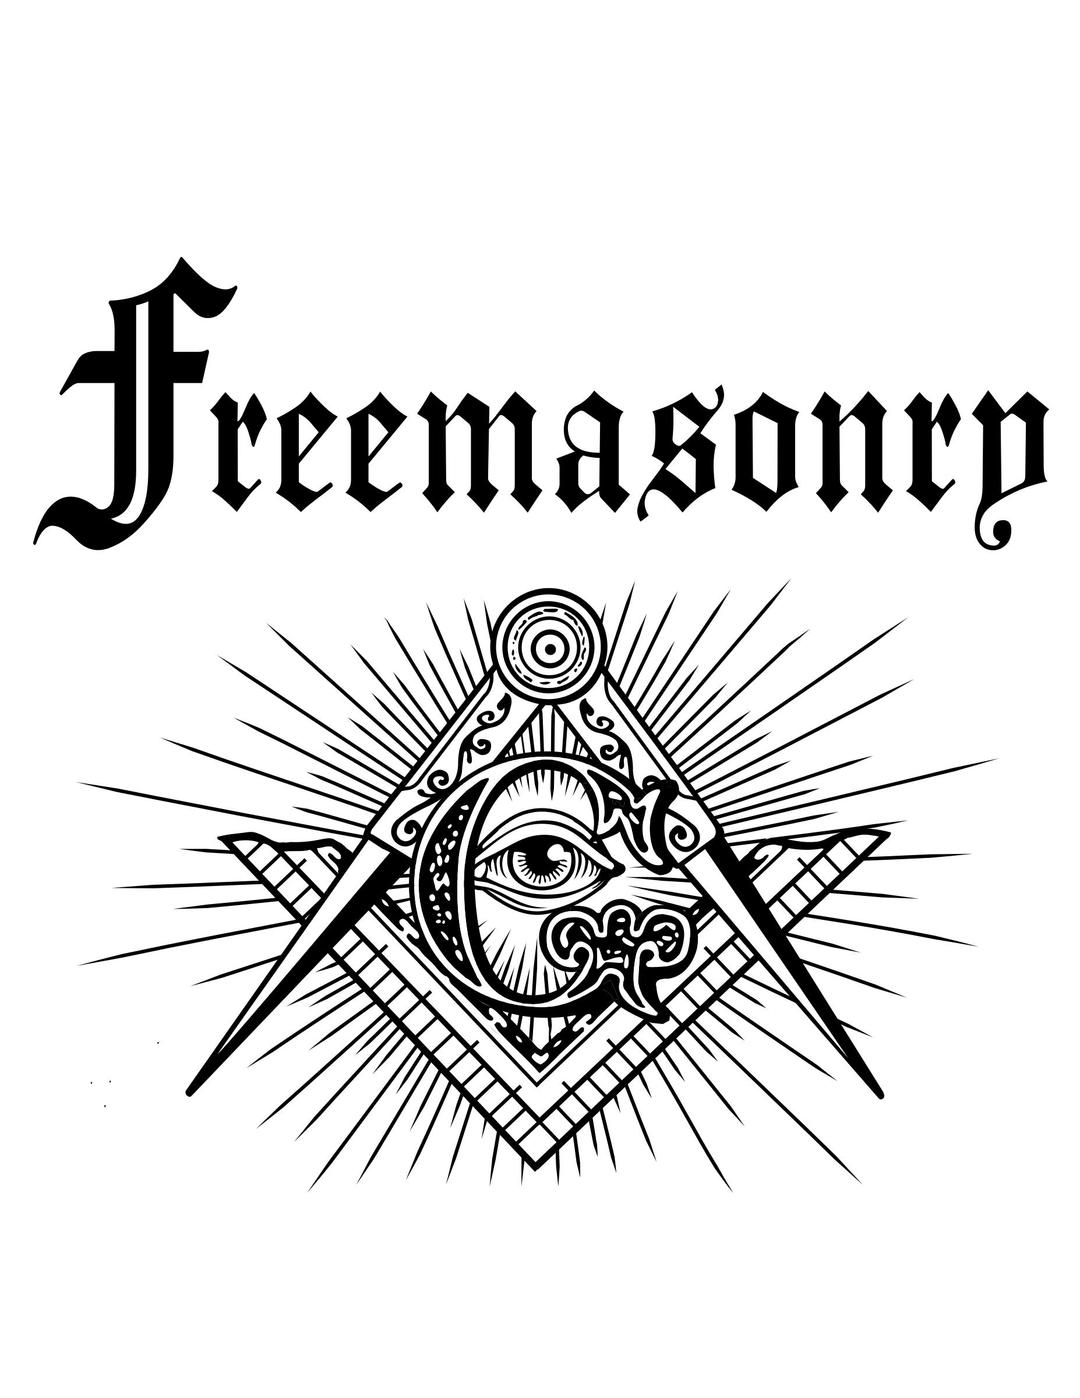 Freemasonry,  Masonic Blue Lodge Logo designed by  Brothers for Brothers. 32nd degree Scottish Rite Freemason  png transparent